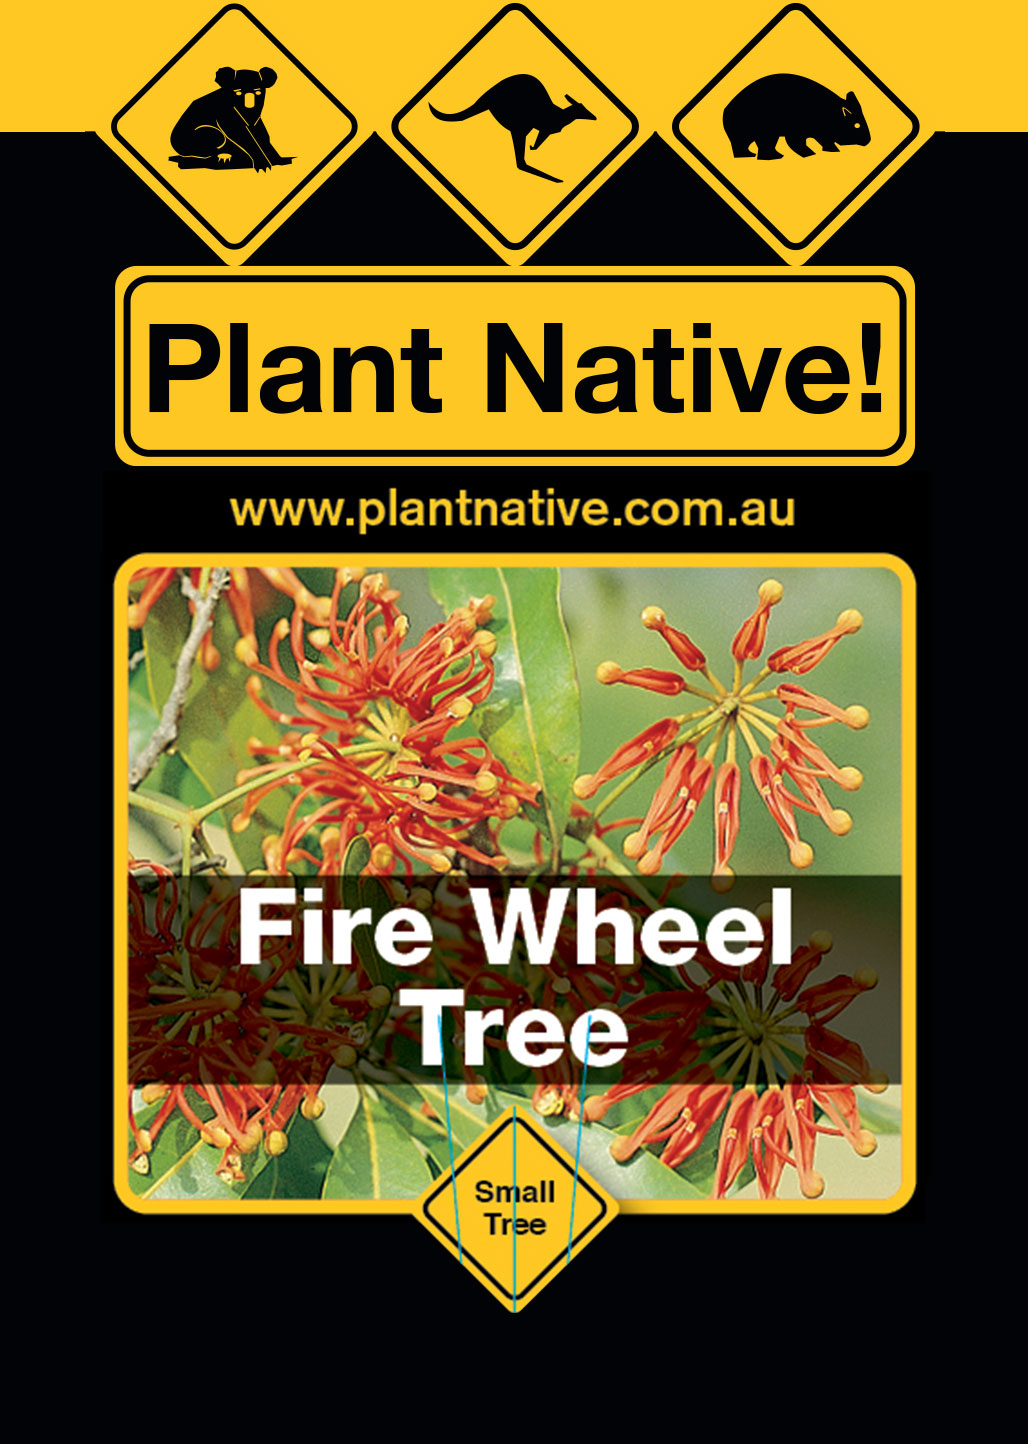 Fire Wheel Tree - Plant Native!